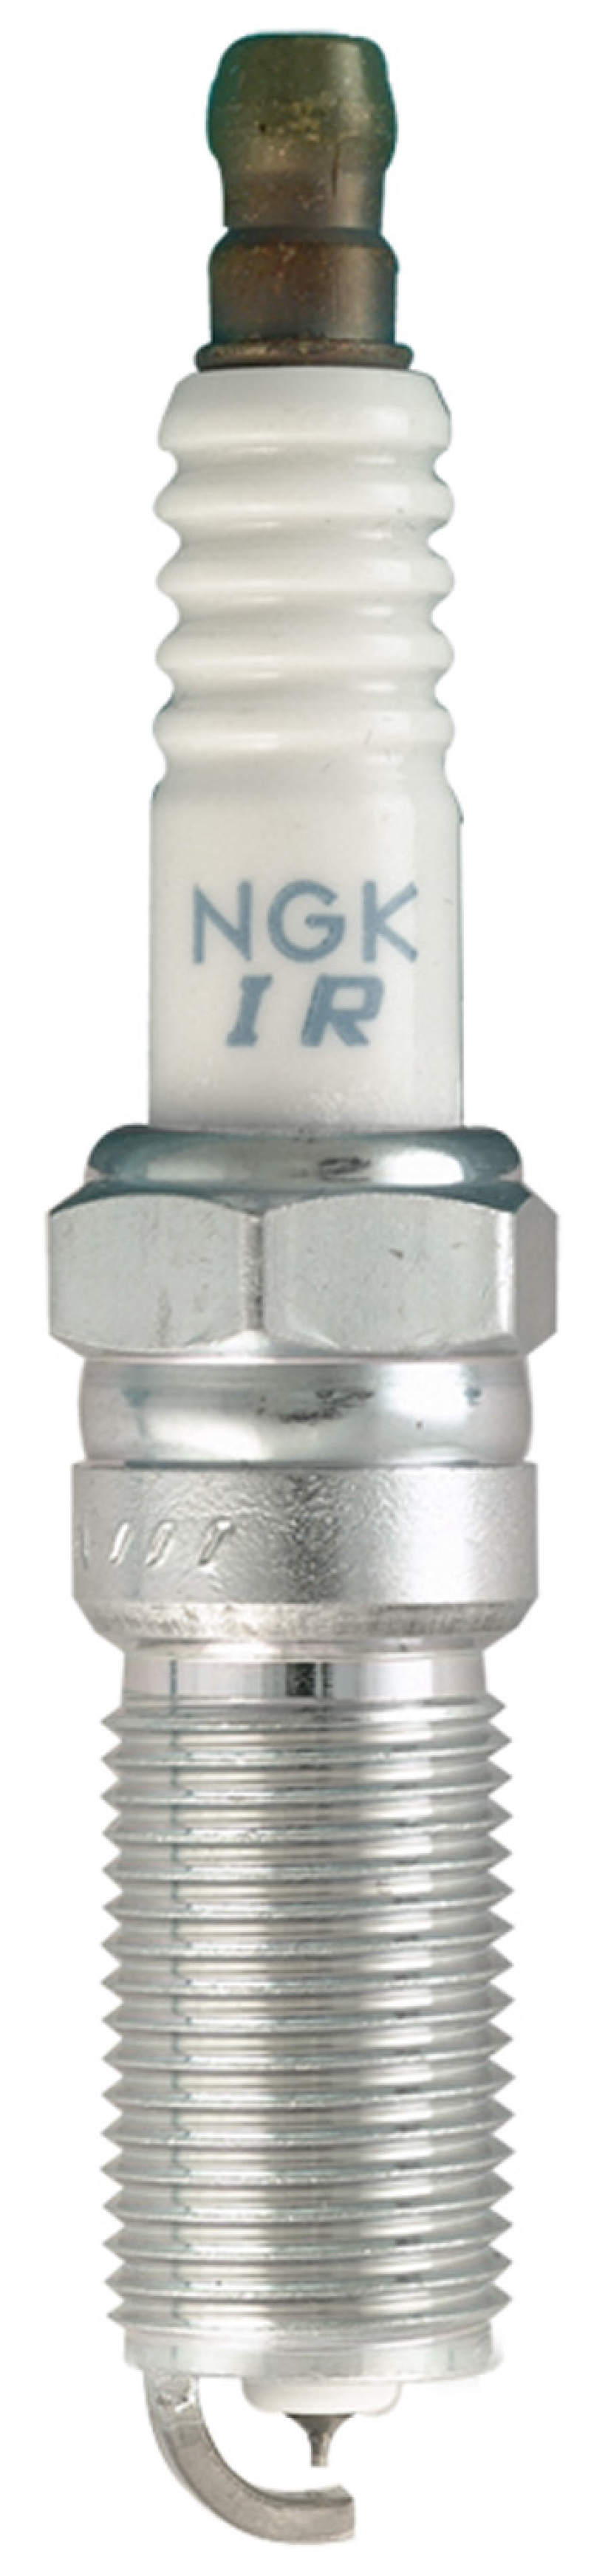 NGK Laser Iridium/Platinum Spark Plug Box of 4 (ILTR7E9) - 90543